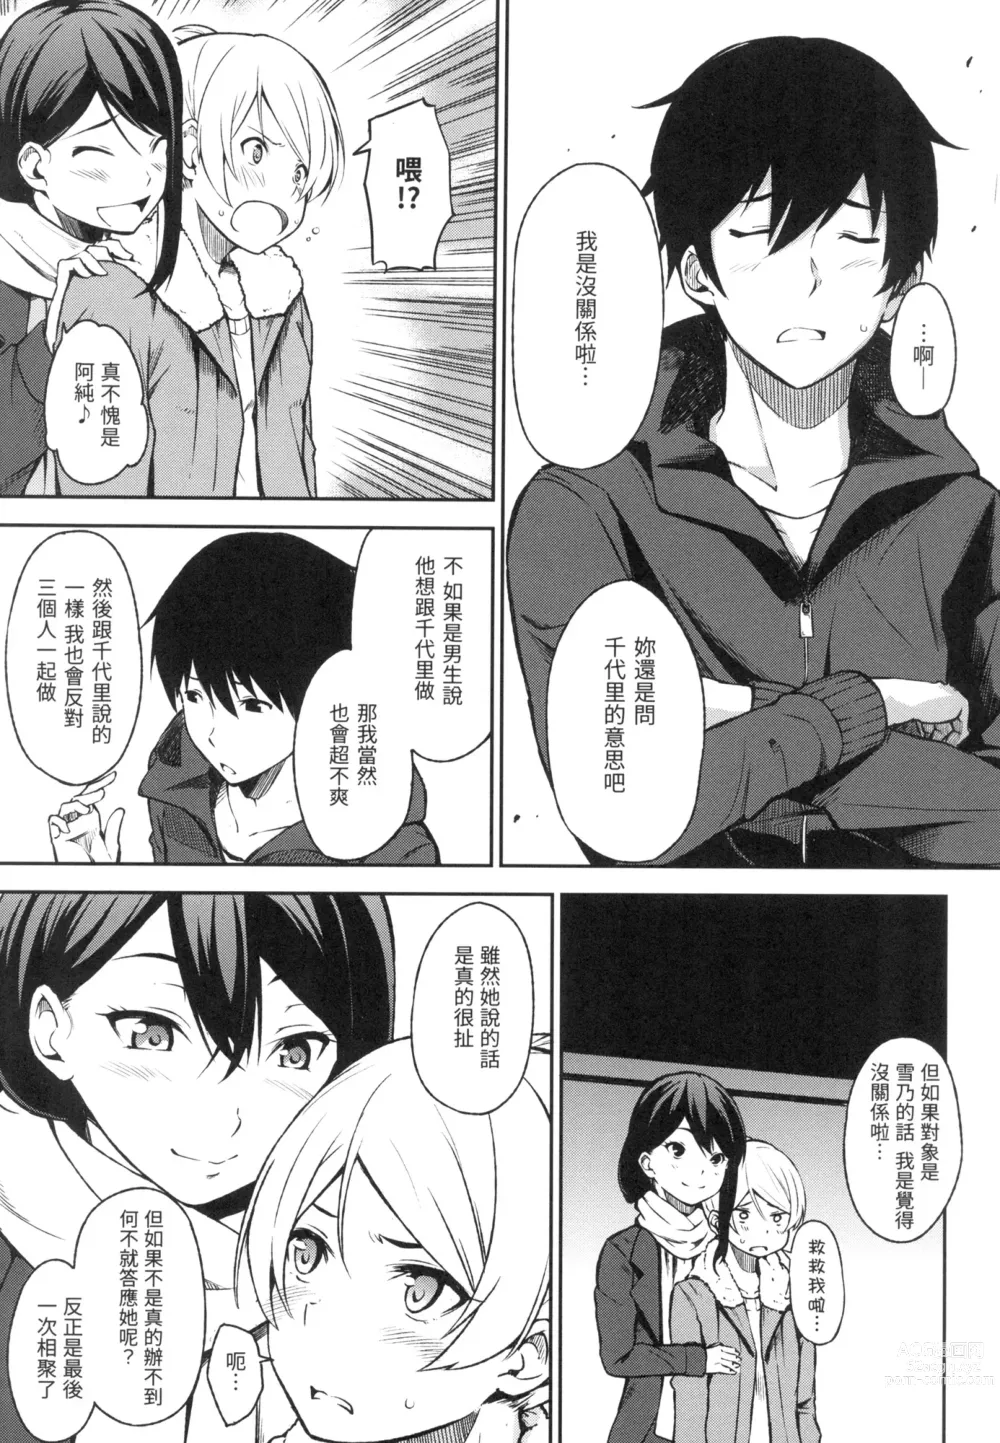 Page 202 of manga 點心時間 (decensored)